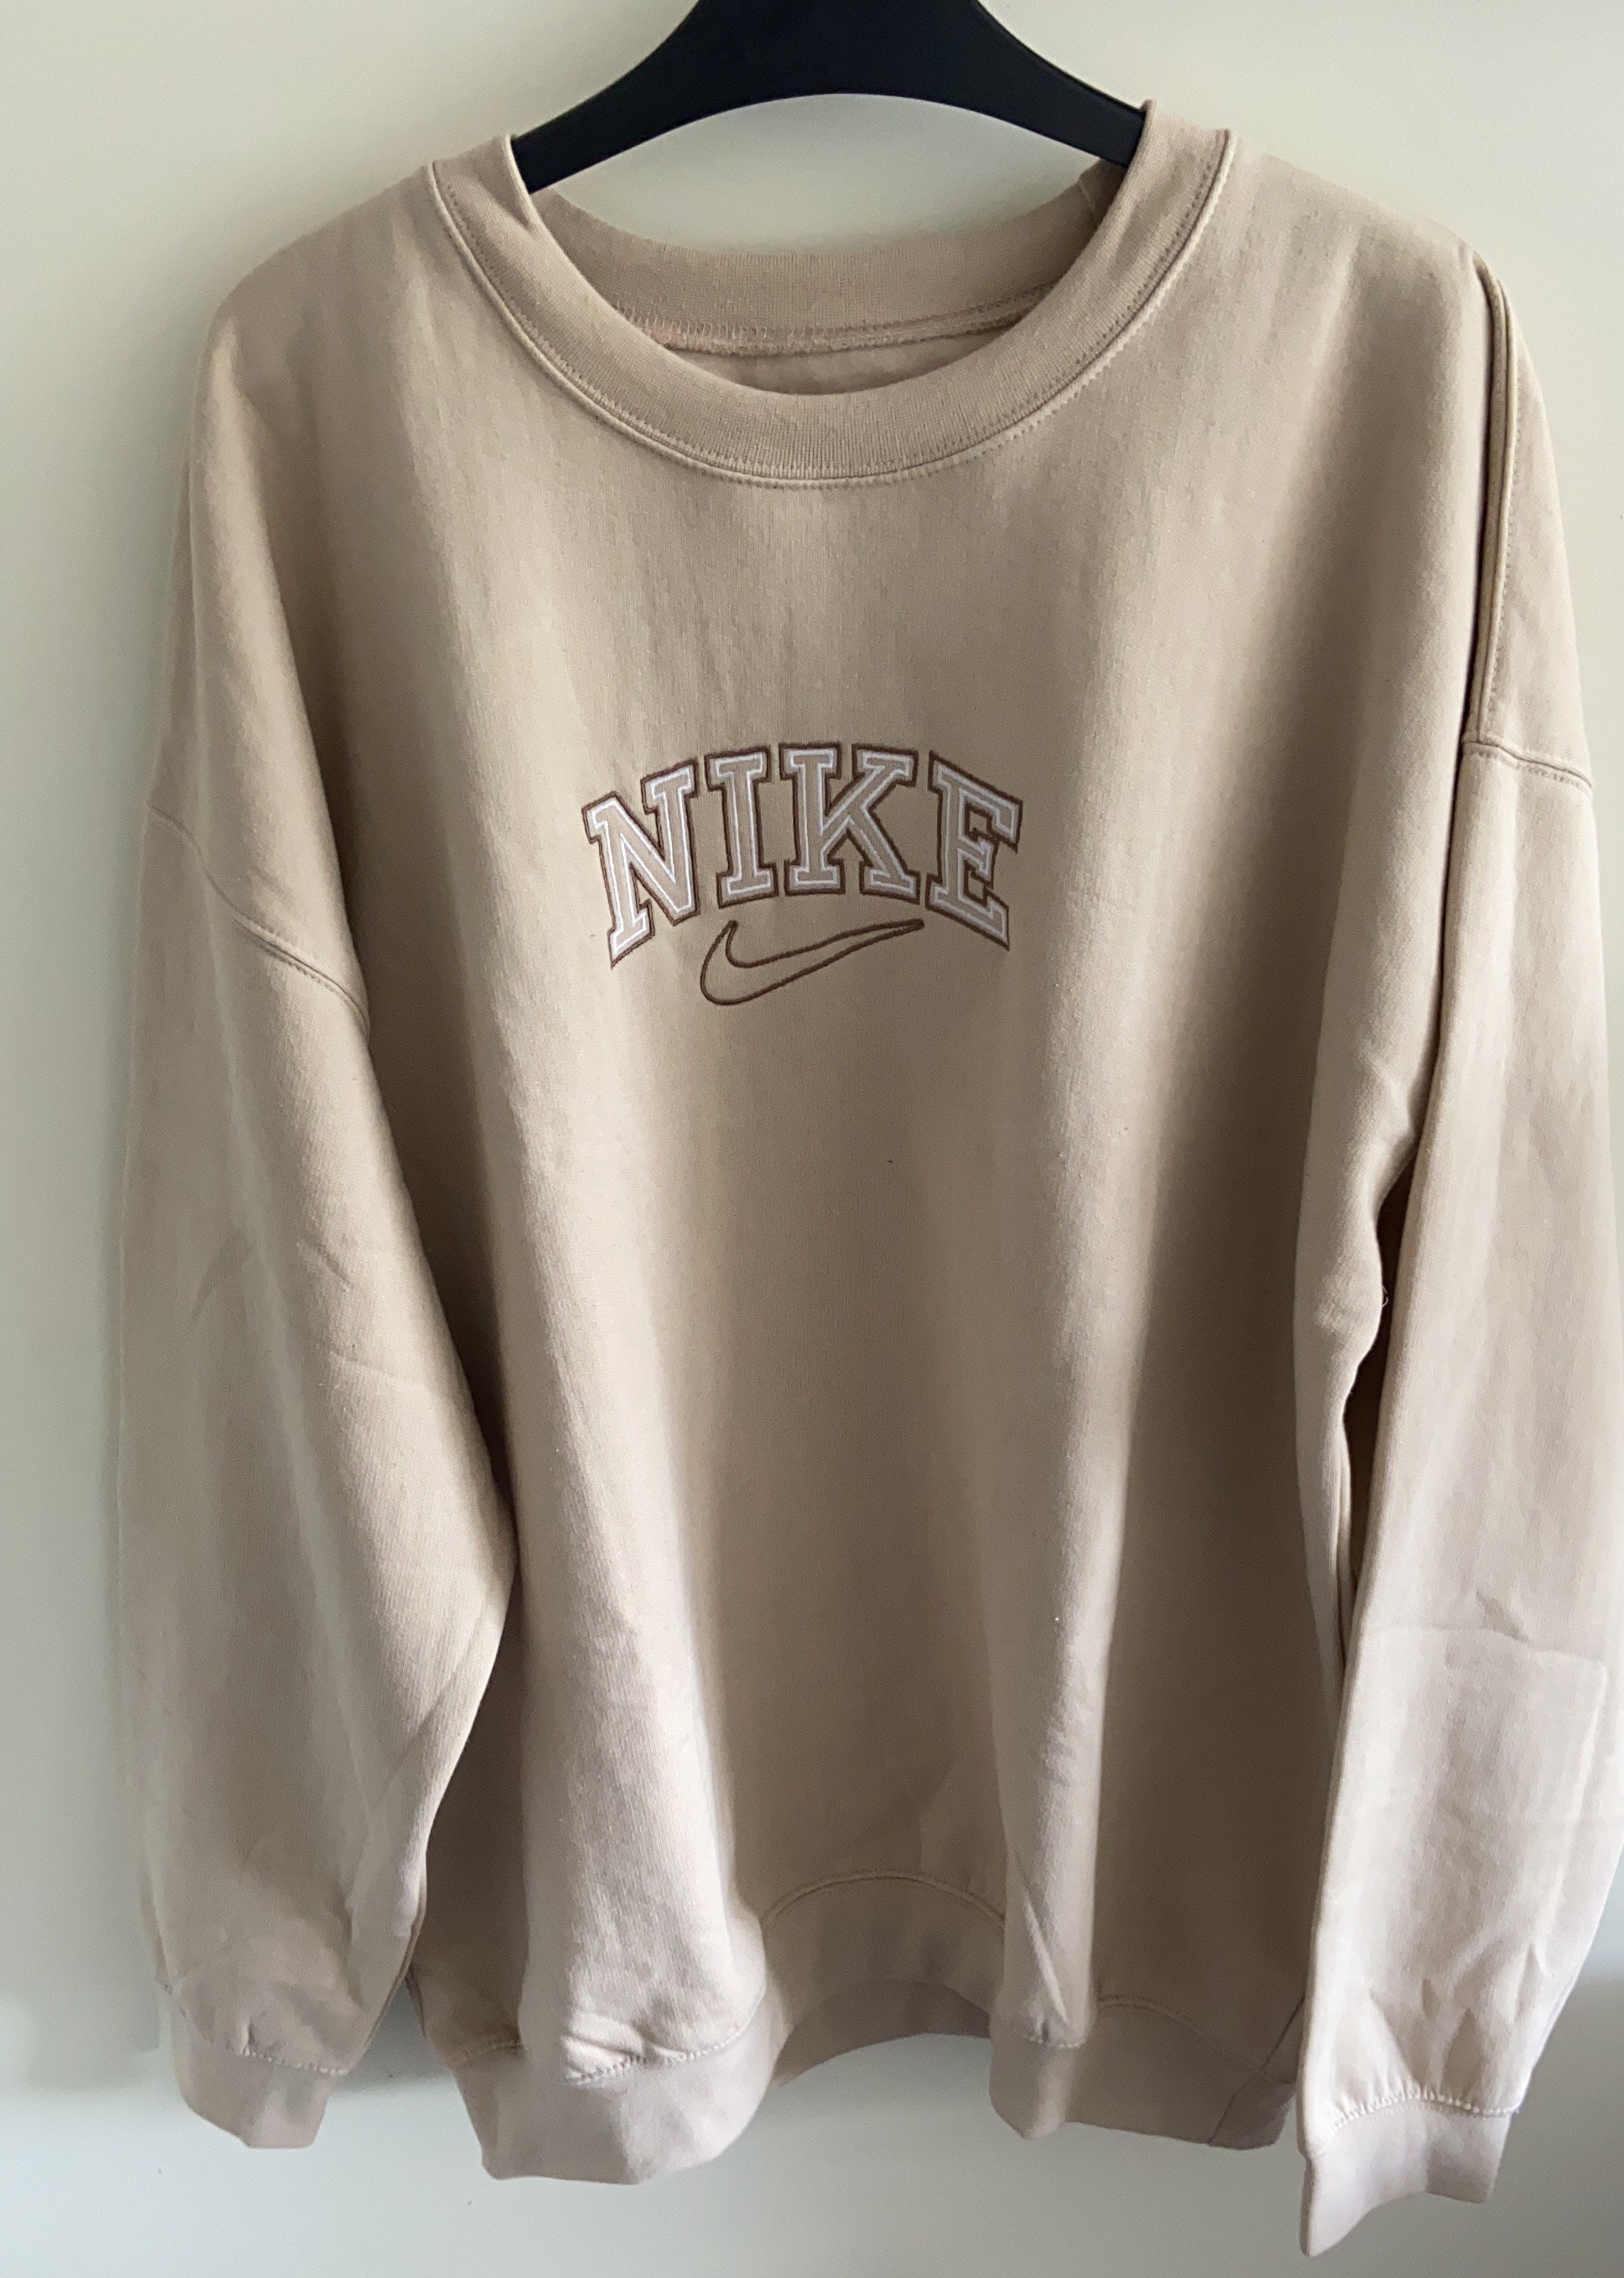 Vintage Nike Spellout Sweatshirts | Etsy